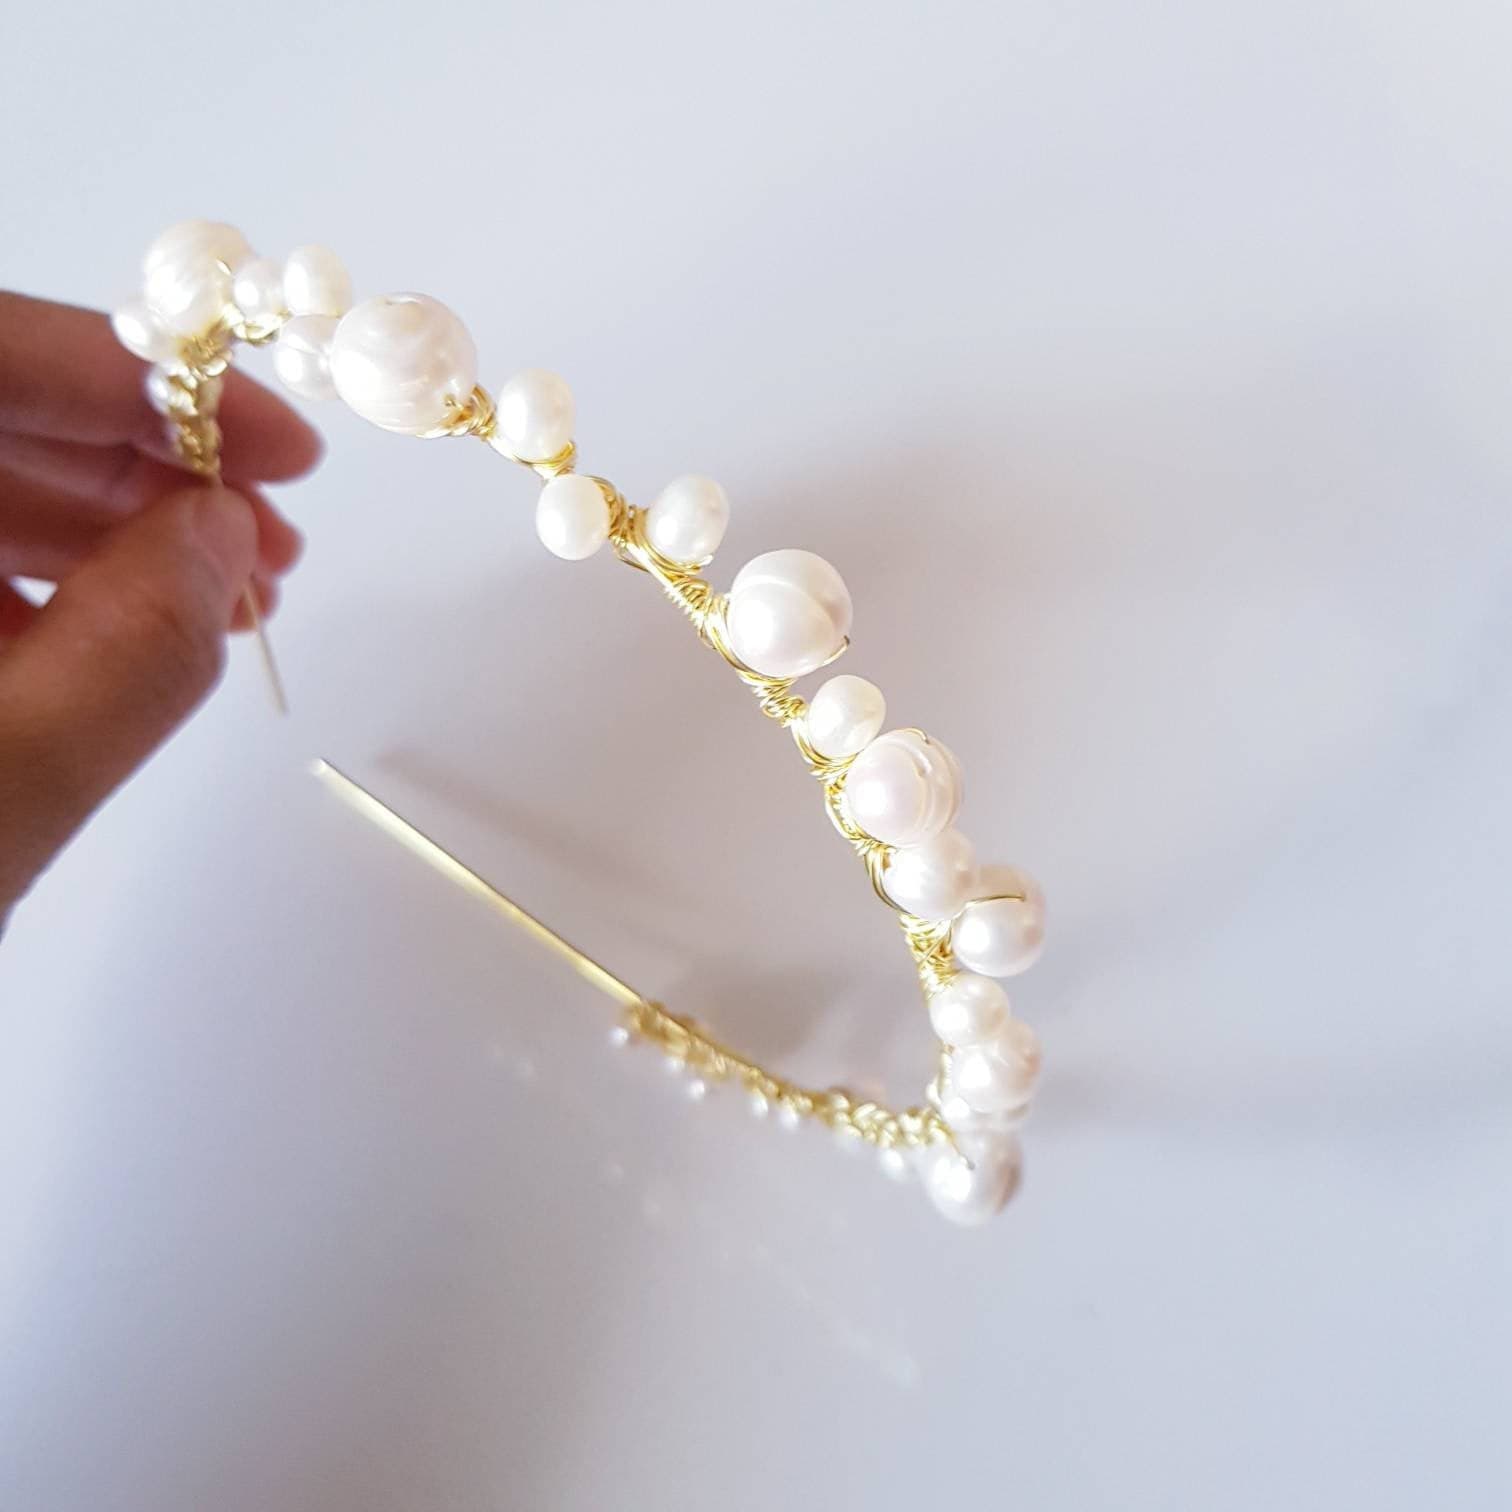 BoutiquebyBrendaLee SIMPLICITY White Cream Pearl Headband Bridal Wedding headpiece hairband handmade handcrafted hair accessories Australia